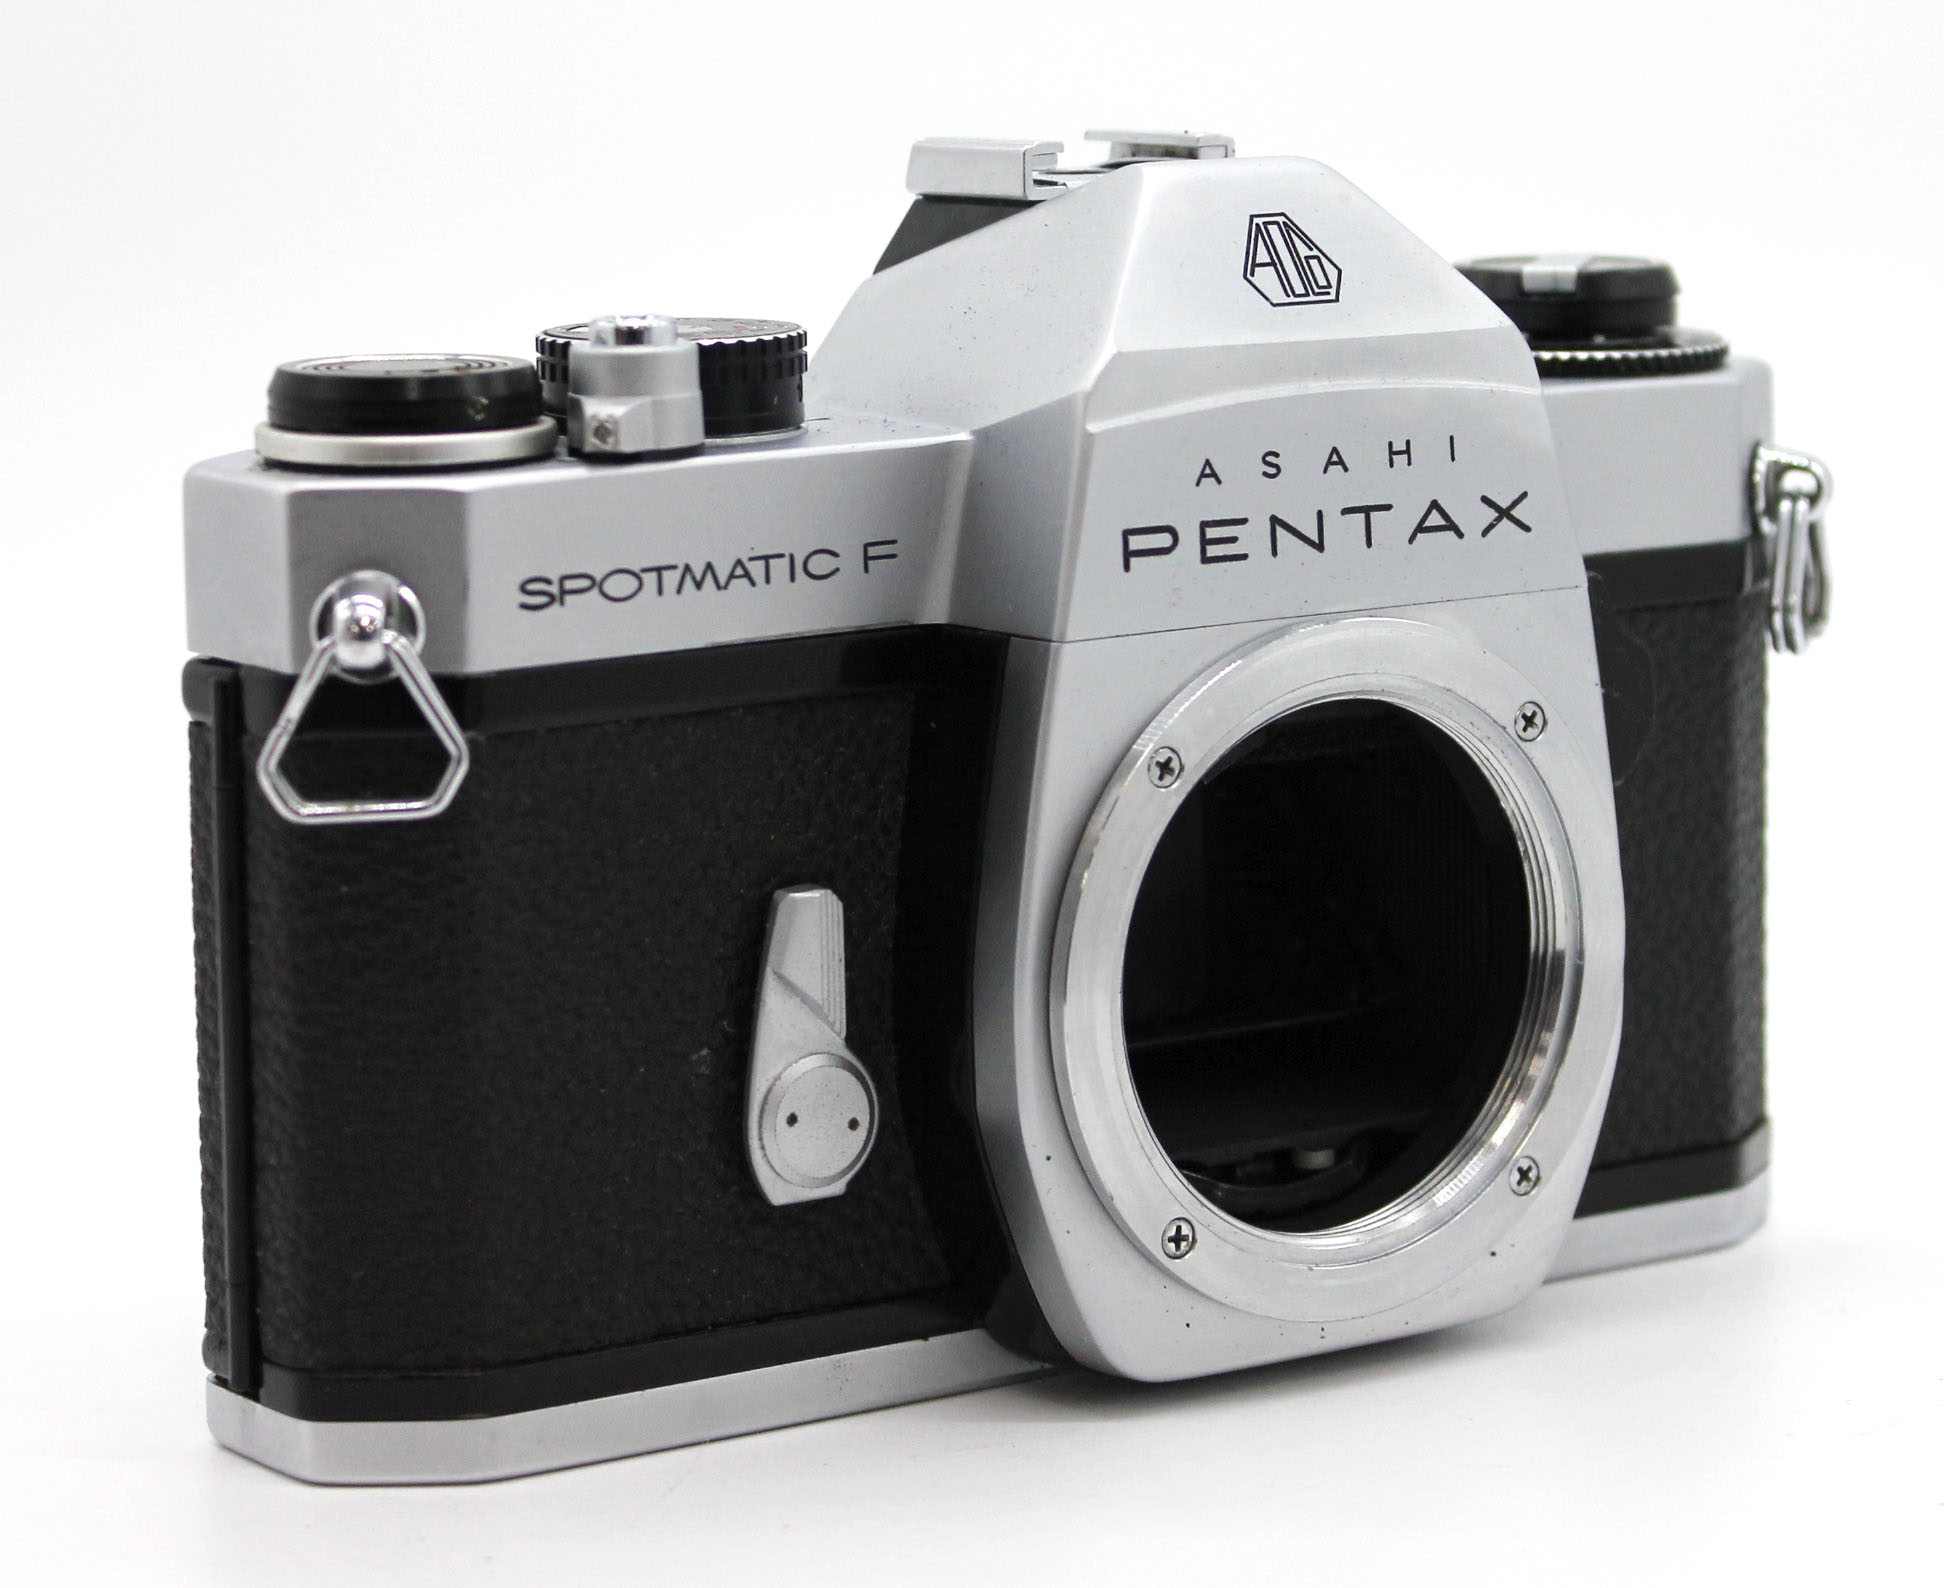 Asahi Pentax Spotmatic F SPF 35mm SLR Camera with SMC Takumar 55mm F/1.8 Lens and Case from Japan Photo 2